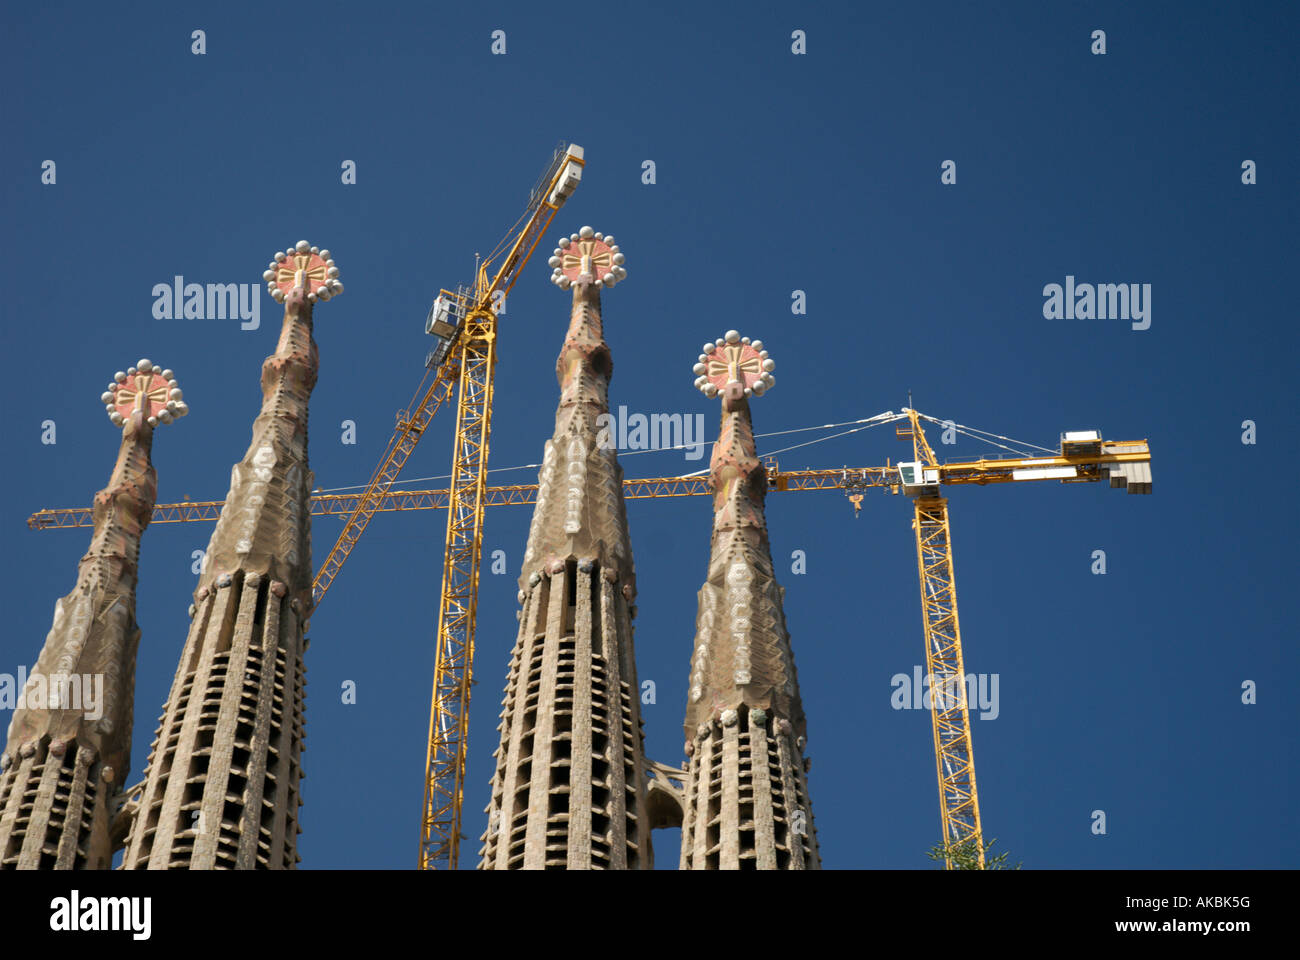 sagrada familia towers close up with cranes Stock Photo